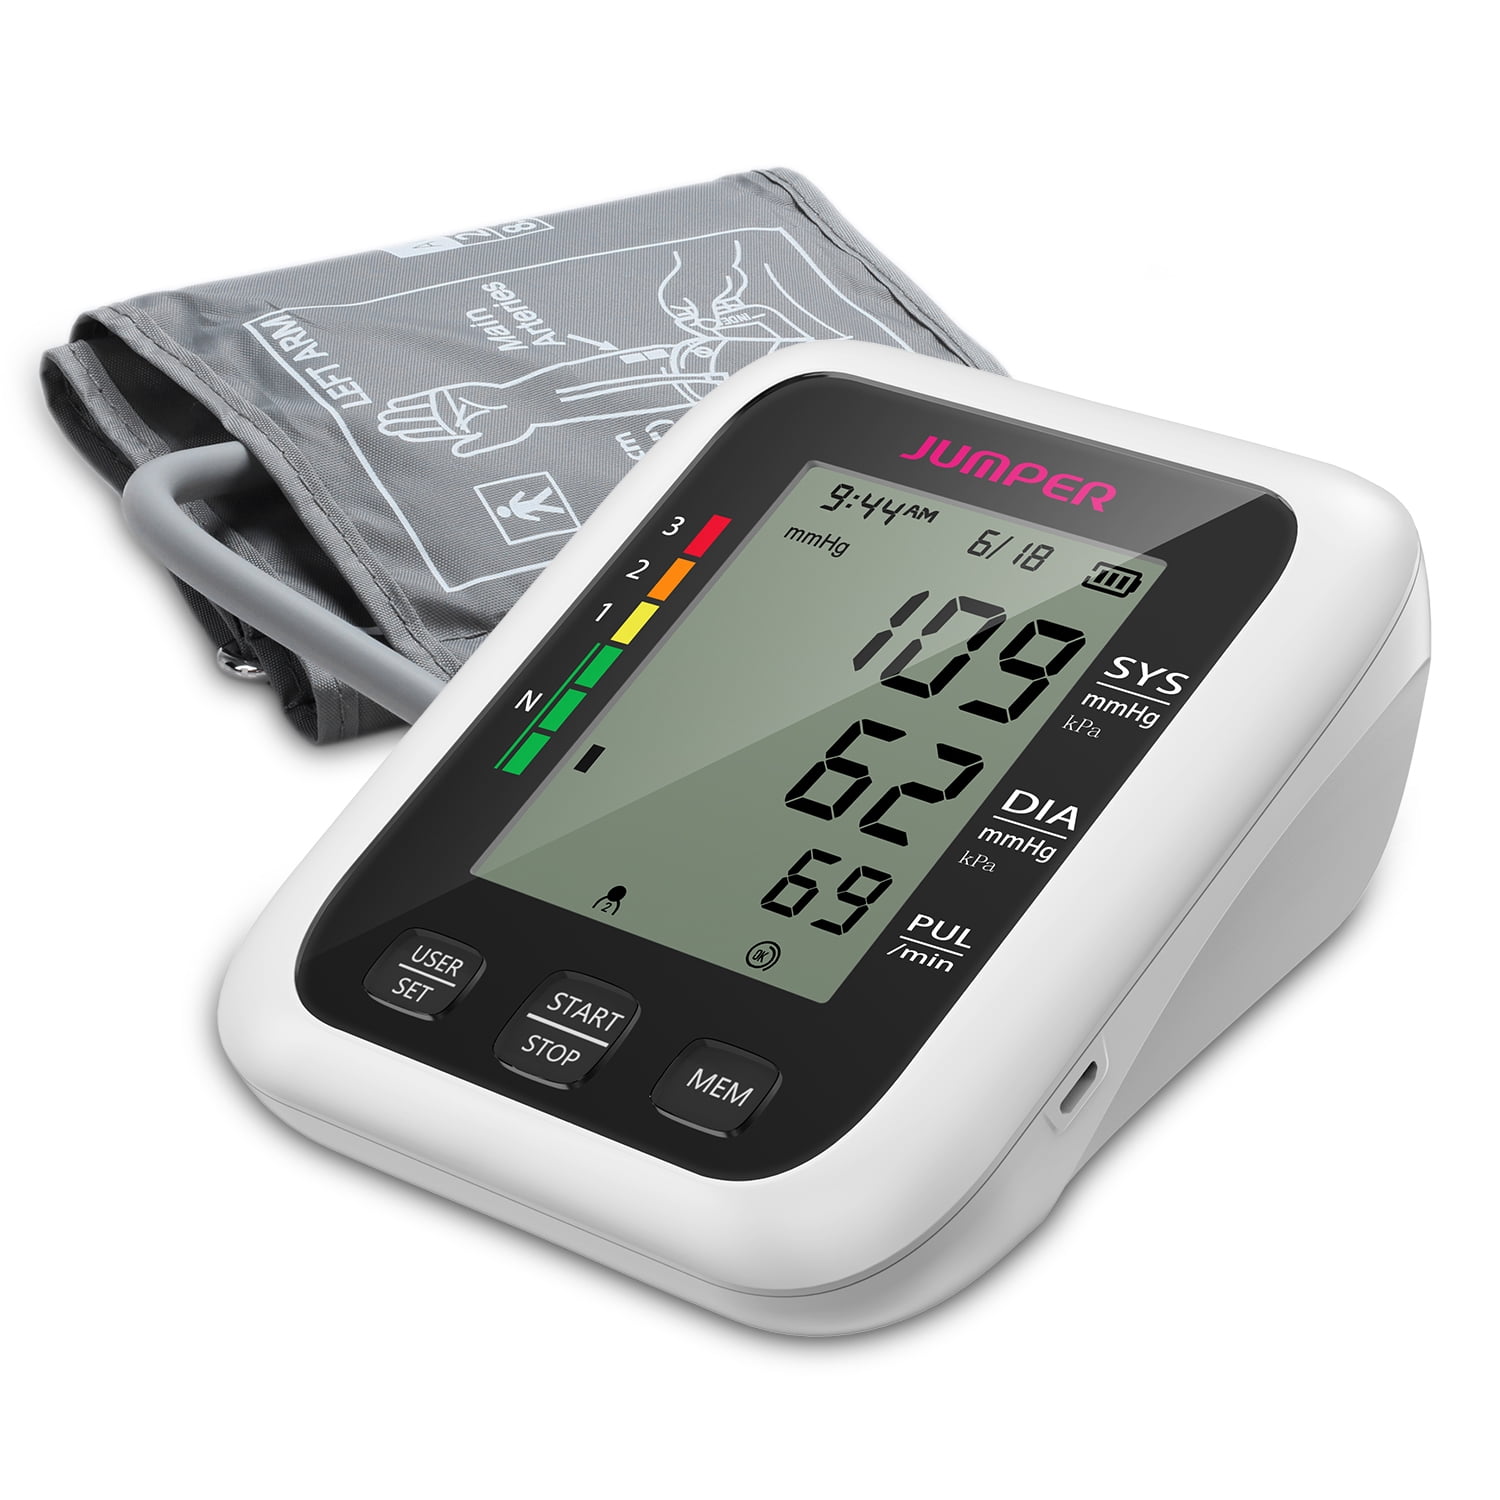 Customer Reviews: CVS Health Upper Arm 400 Series Blood Pressure Monitor -  CVS Pharmacy